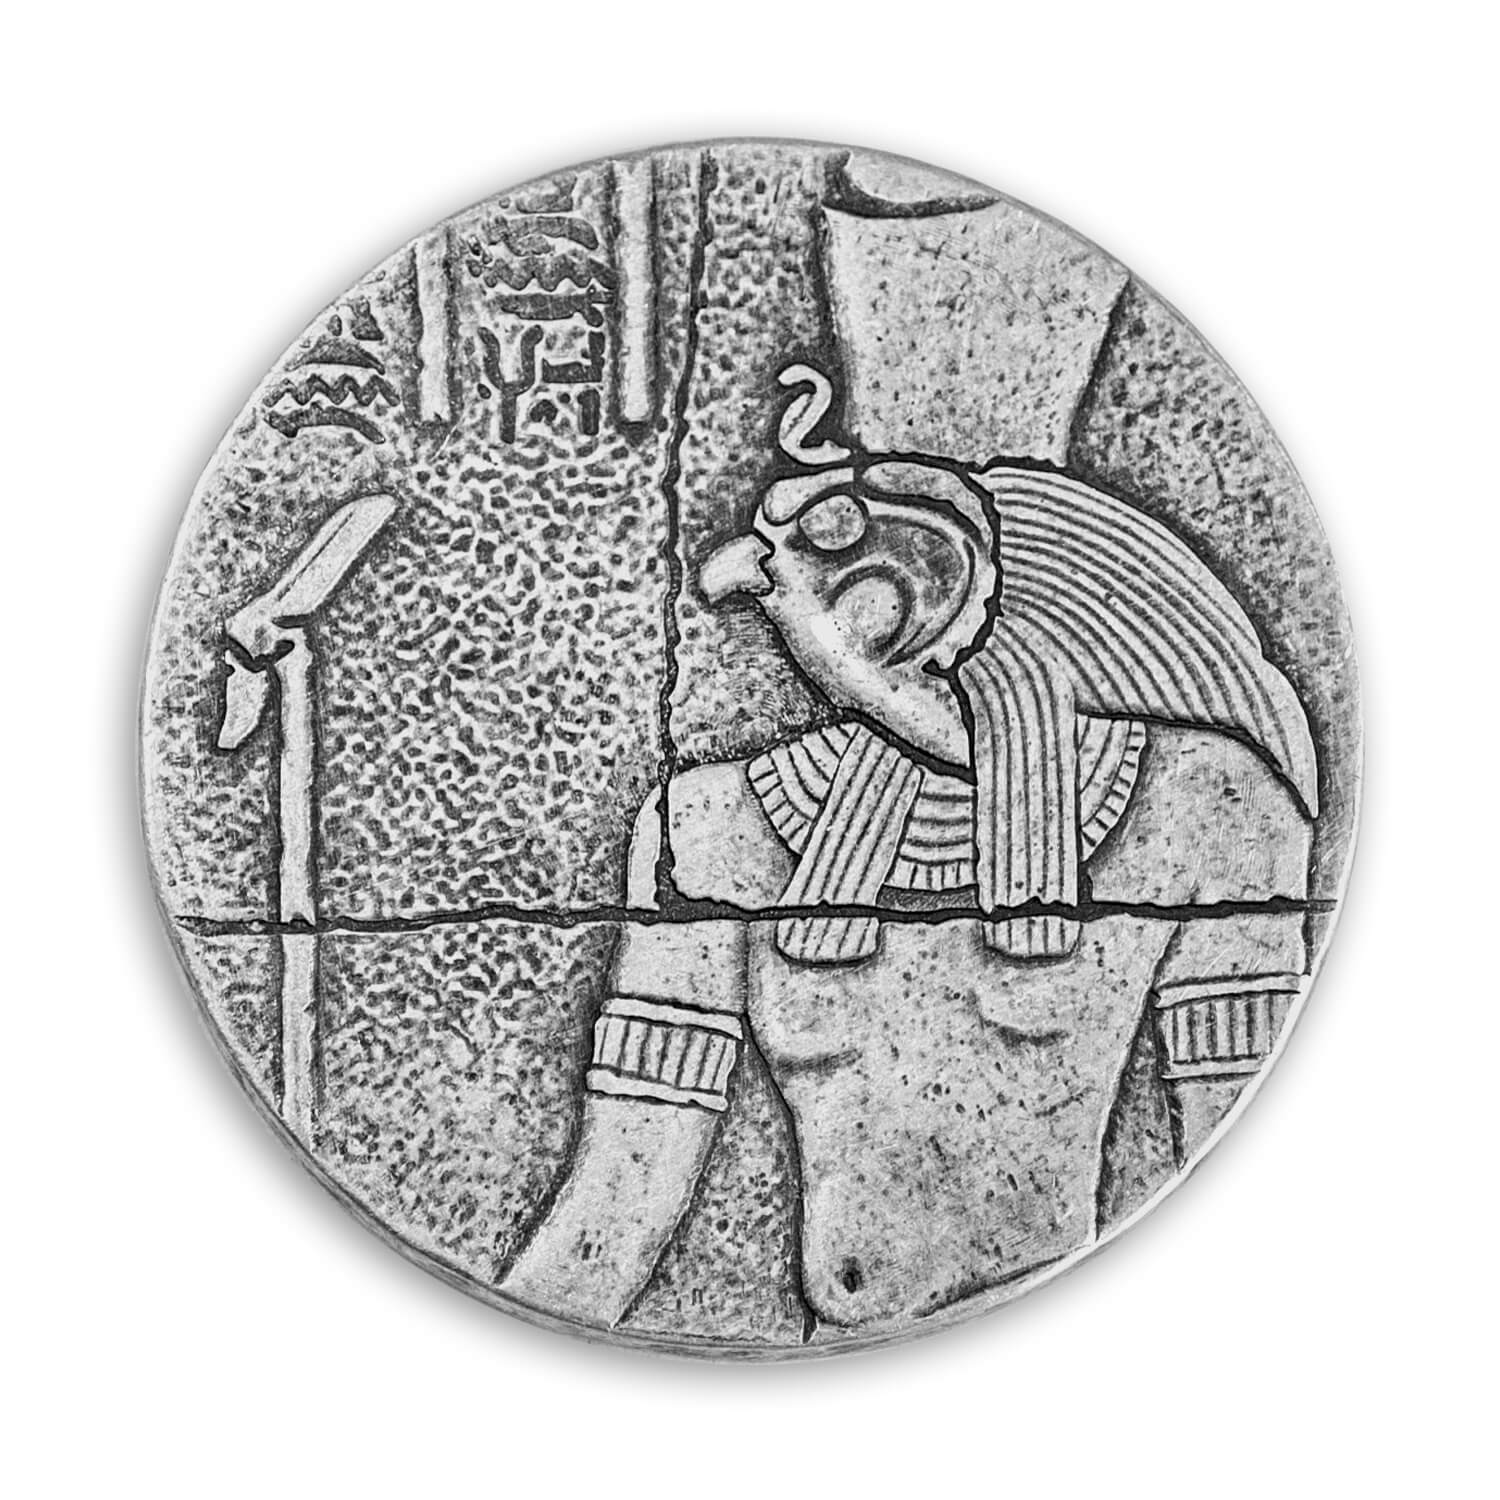 2017 2 oz Ramesses II Egyptian Silver Coin .999 Silver BU Republic of Chad #A444 